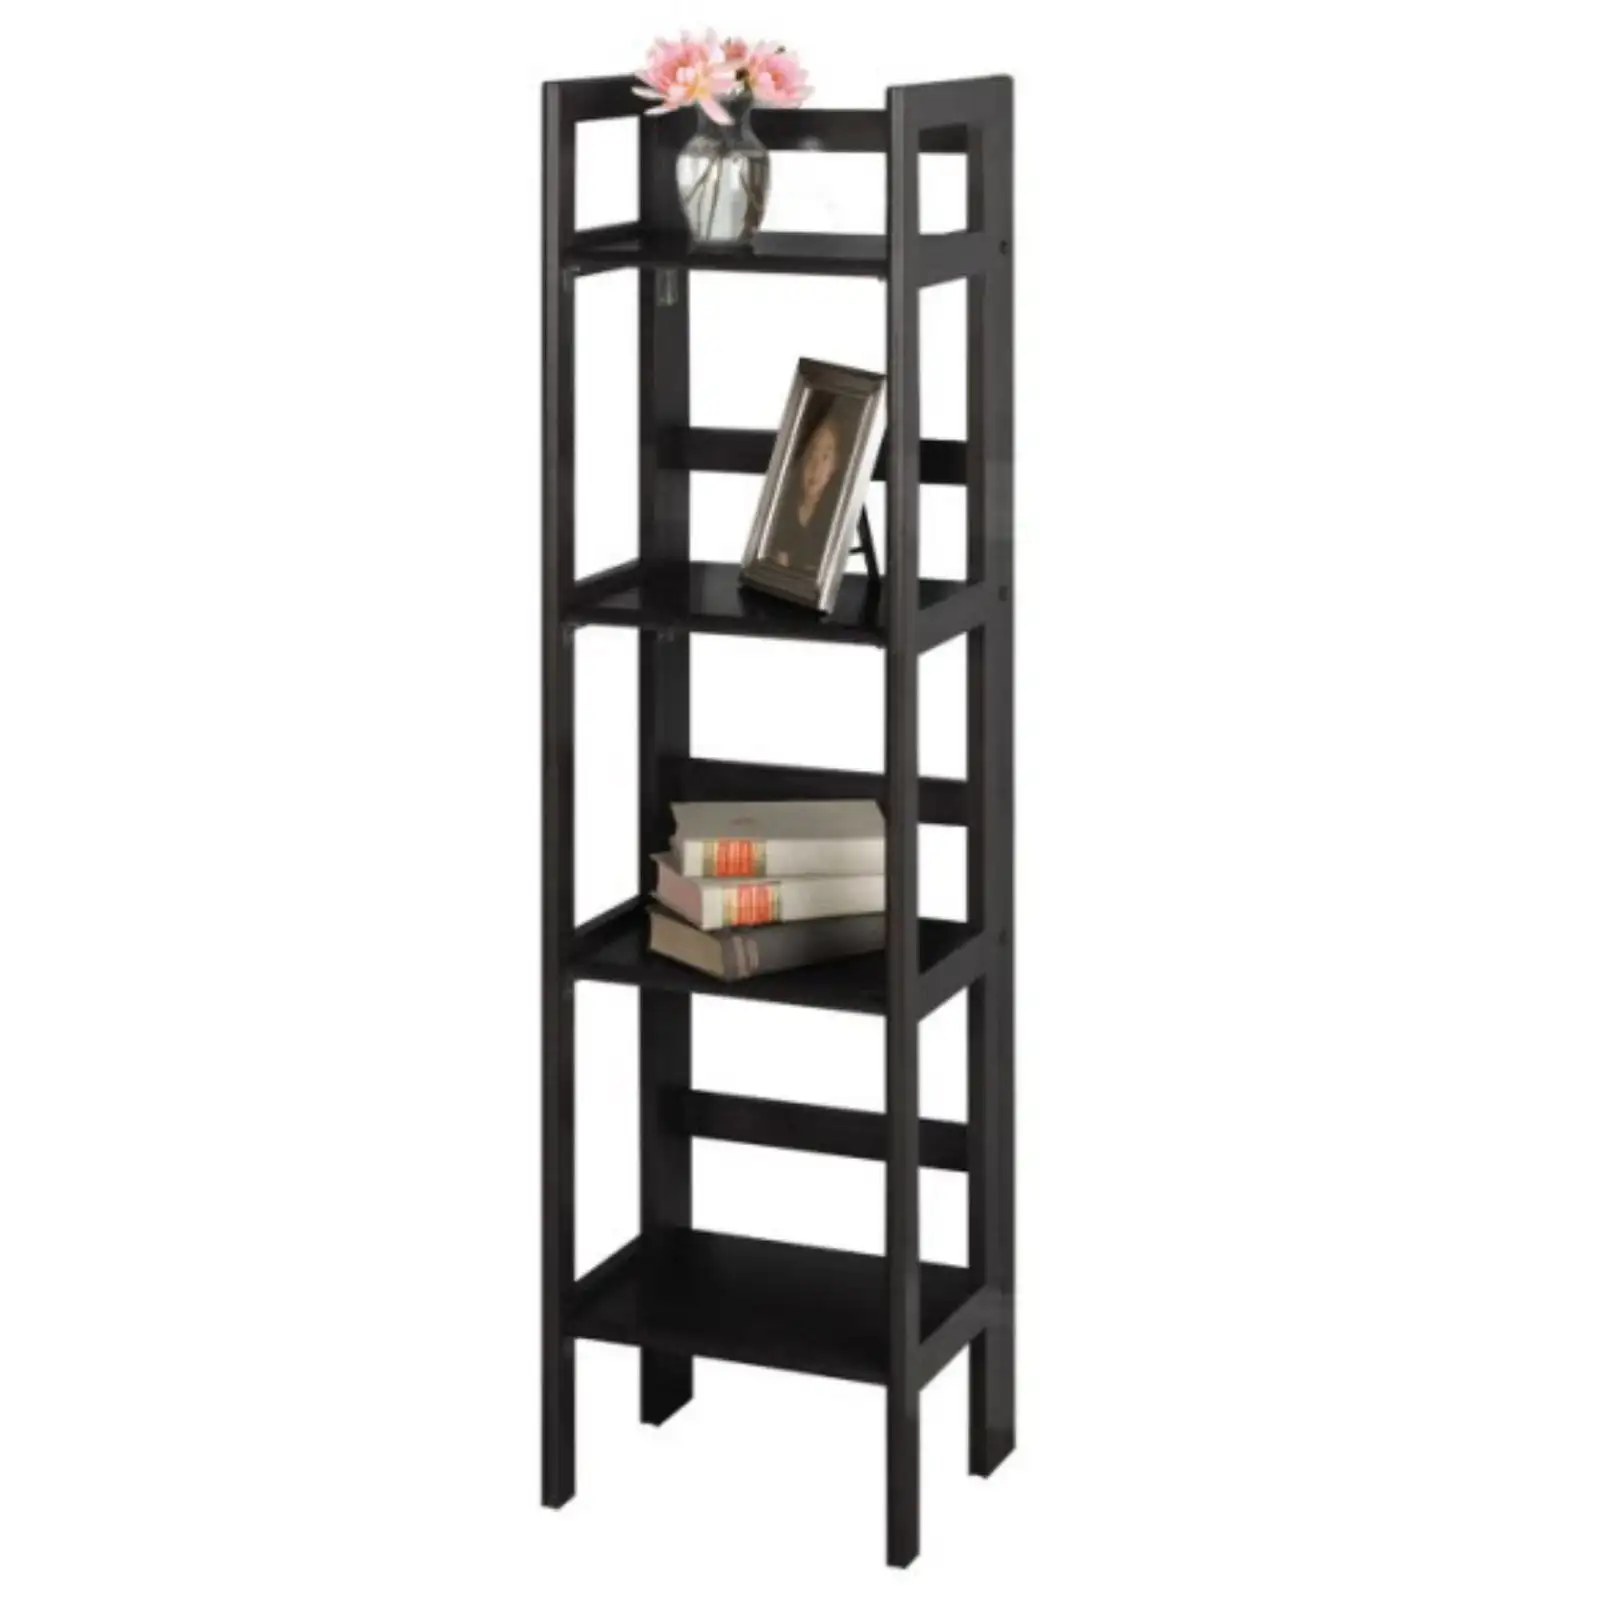 

Winsome Wood Terry 4-Tier Foldable Shelf, Narrow, Black Finish Book Storage Book Shelves Bookshelf Organizer Bookshelves